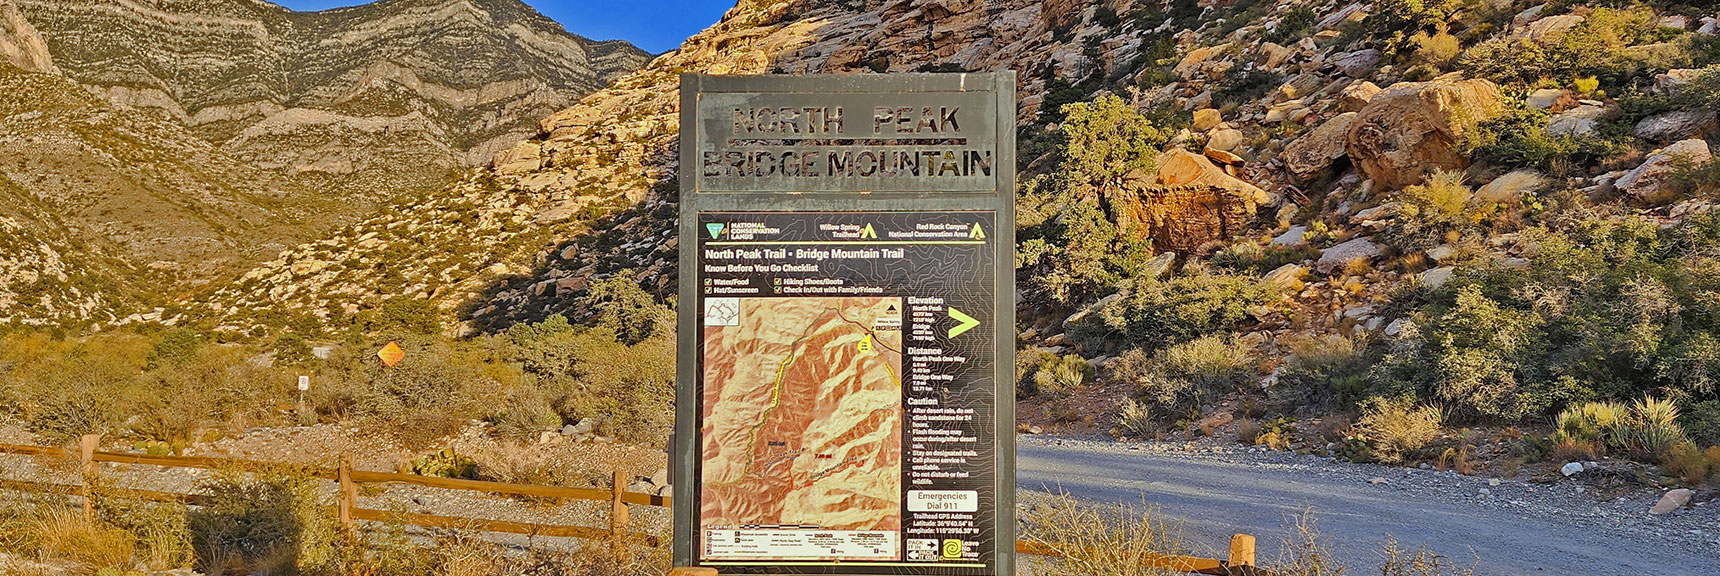 Take Rocky Gap Road Toward North Peak and Bridge Mountain | North Upper Crest Ridgeline | Rainbow Mountain Wilderness, Nevada